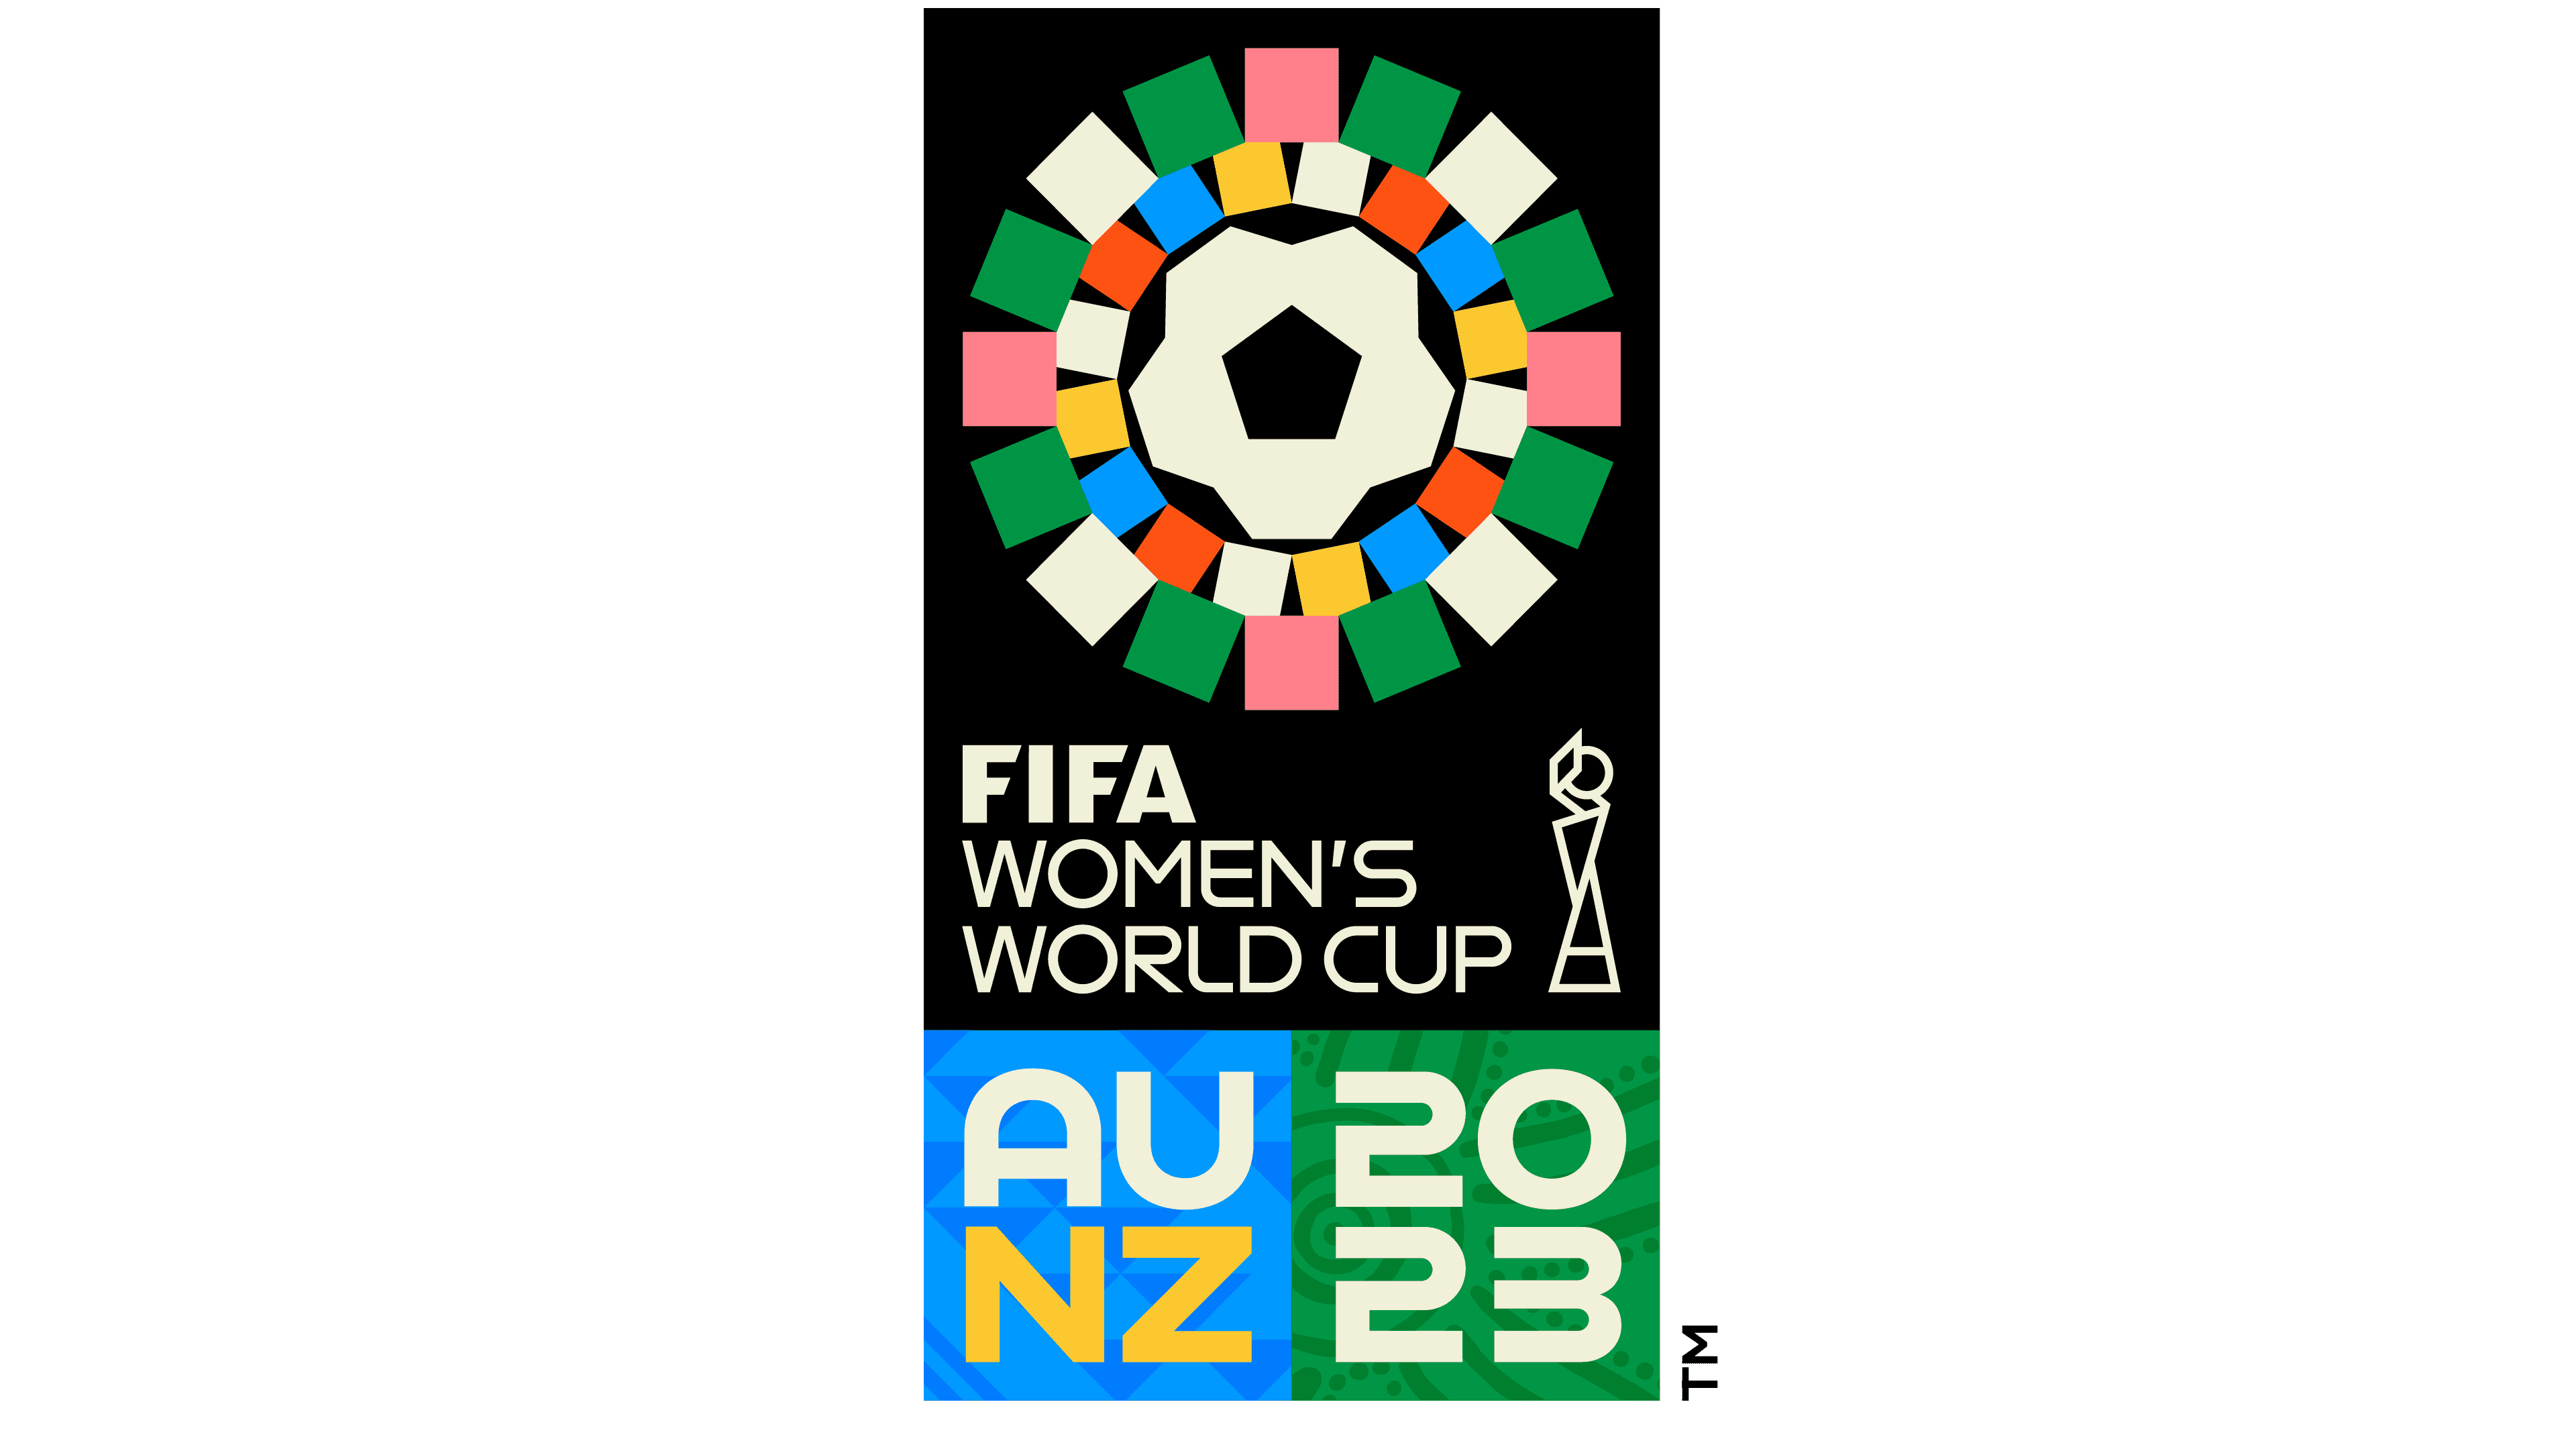 WOMEN'S WORLD CUP